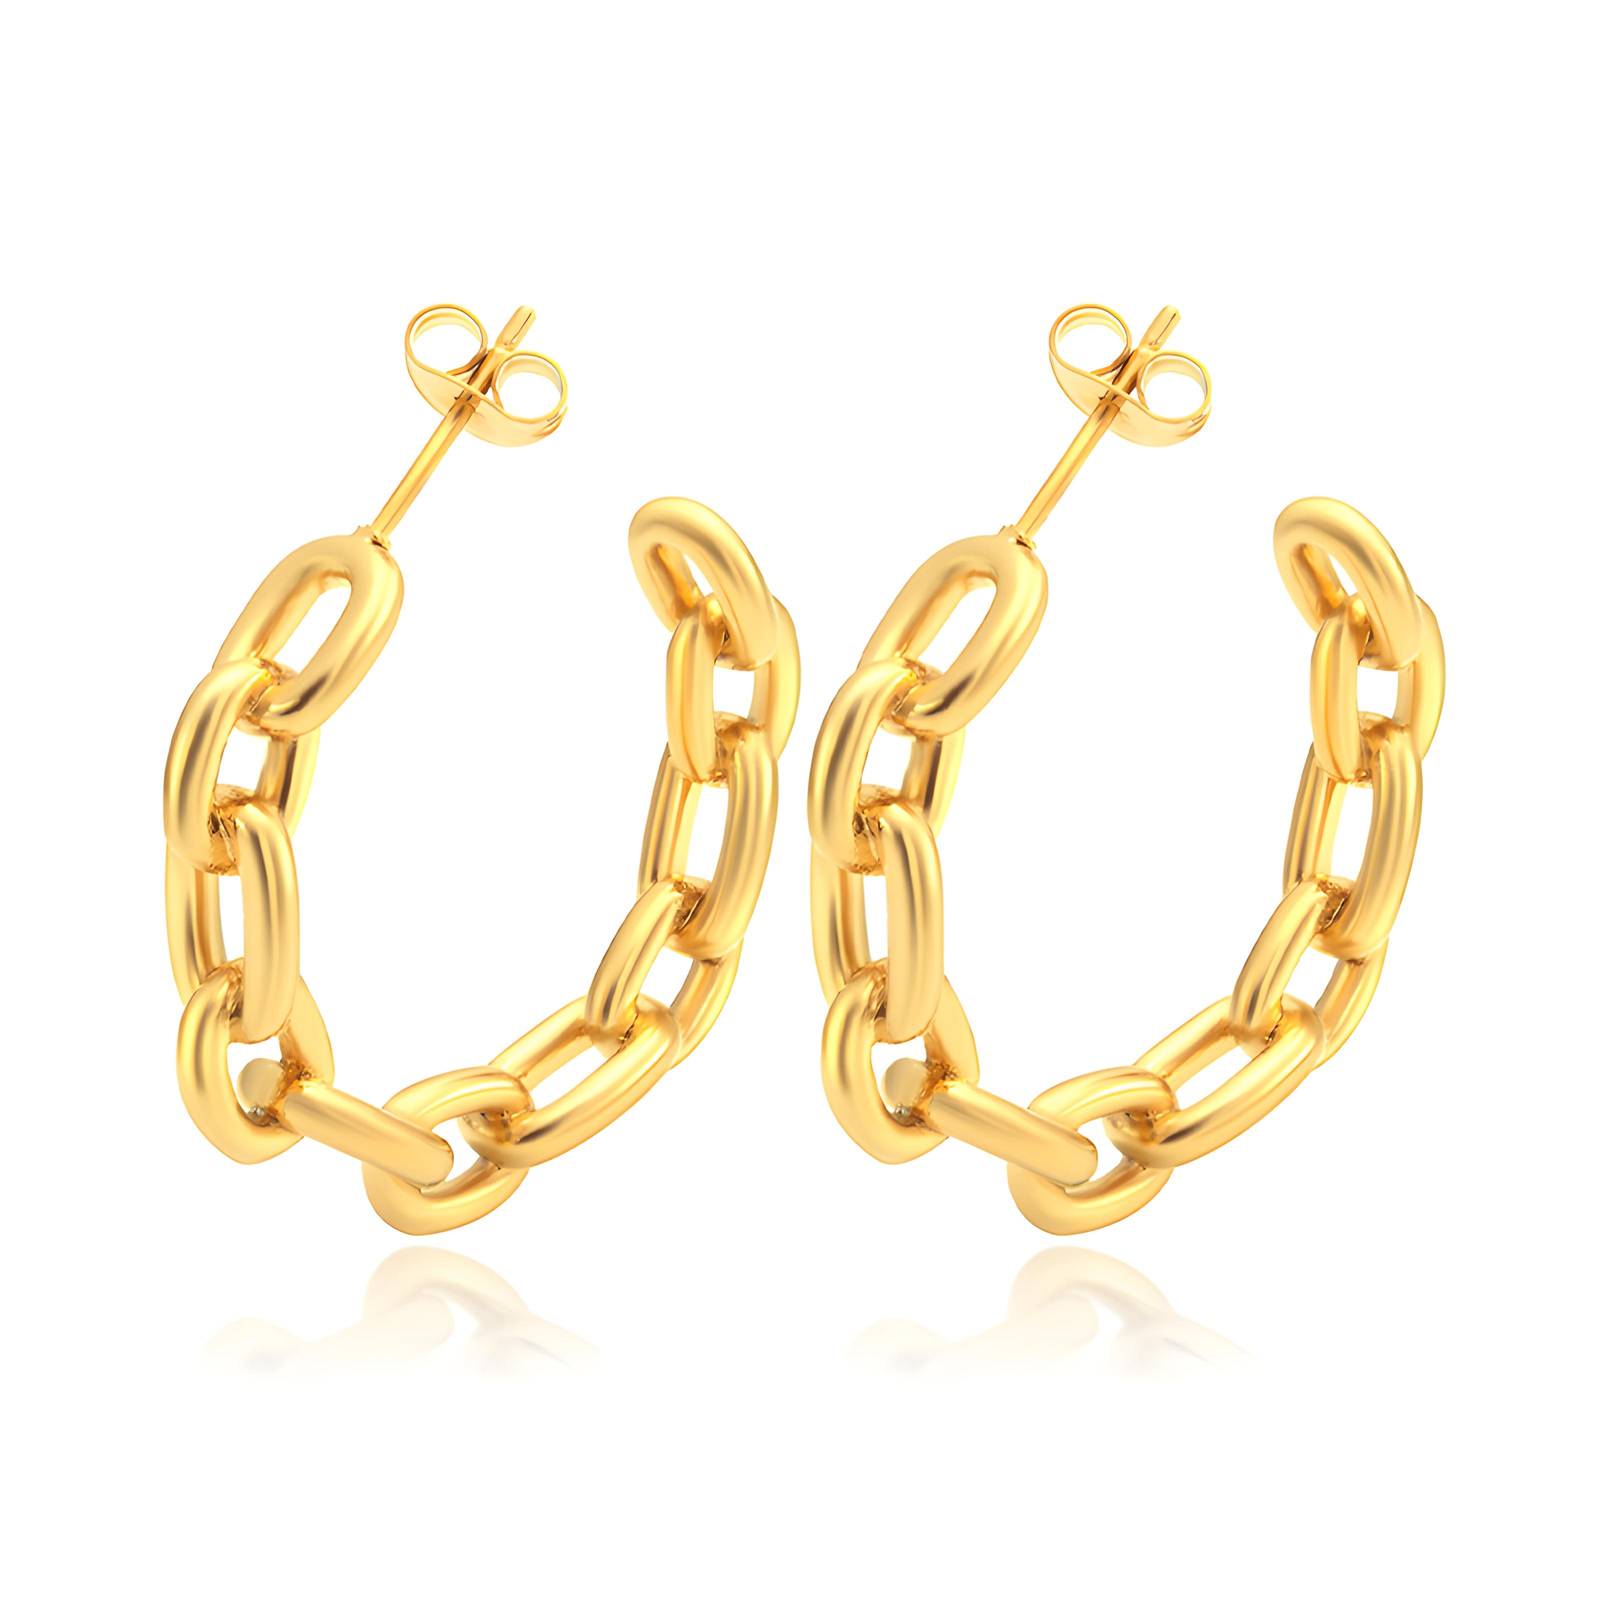 18K gold plated Stainless steel earrings, Intensity SKU #88013-0 ...